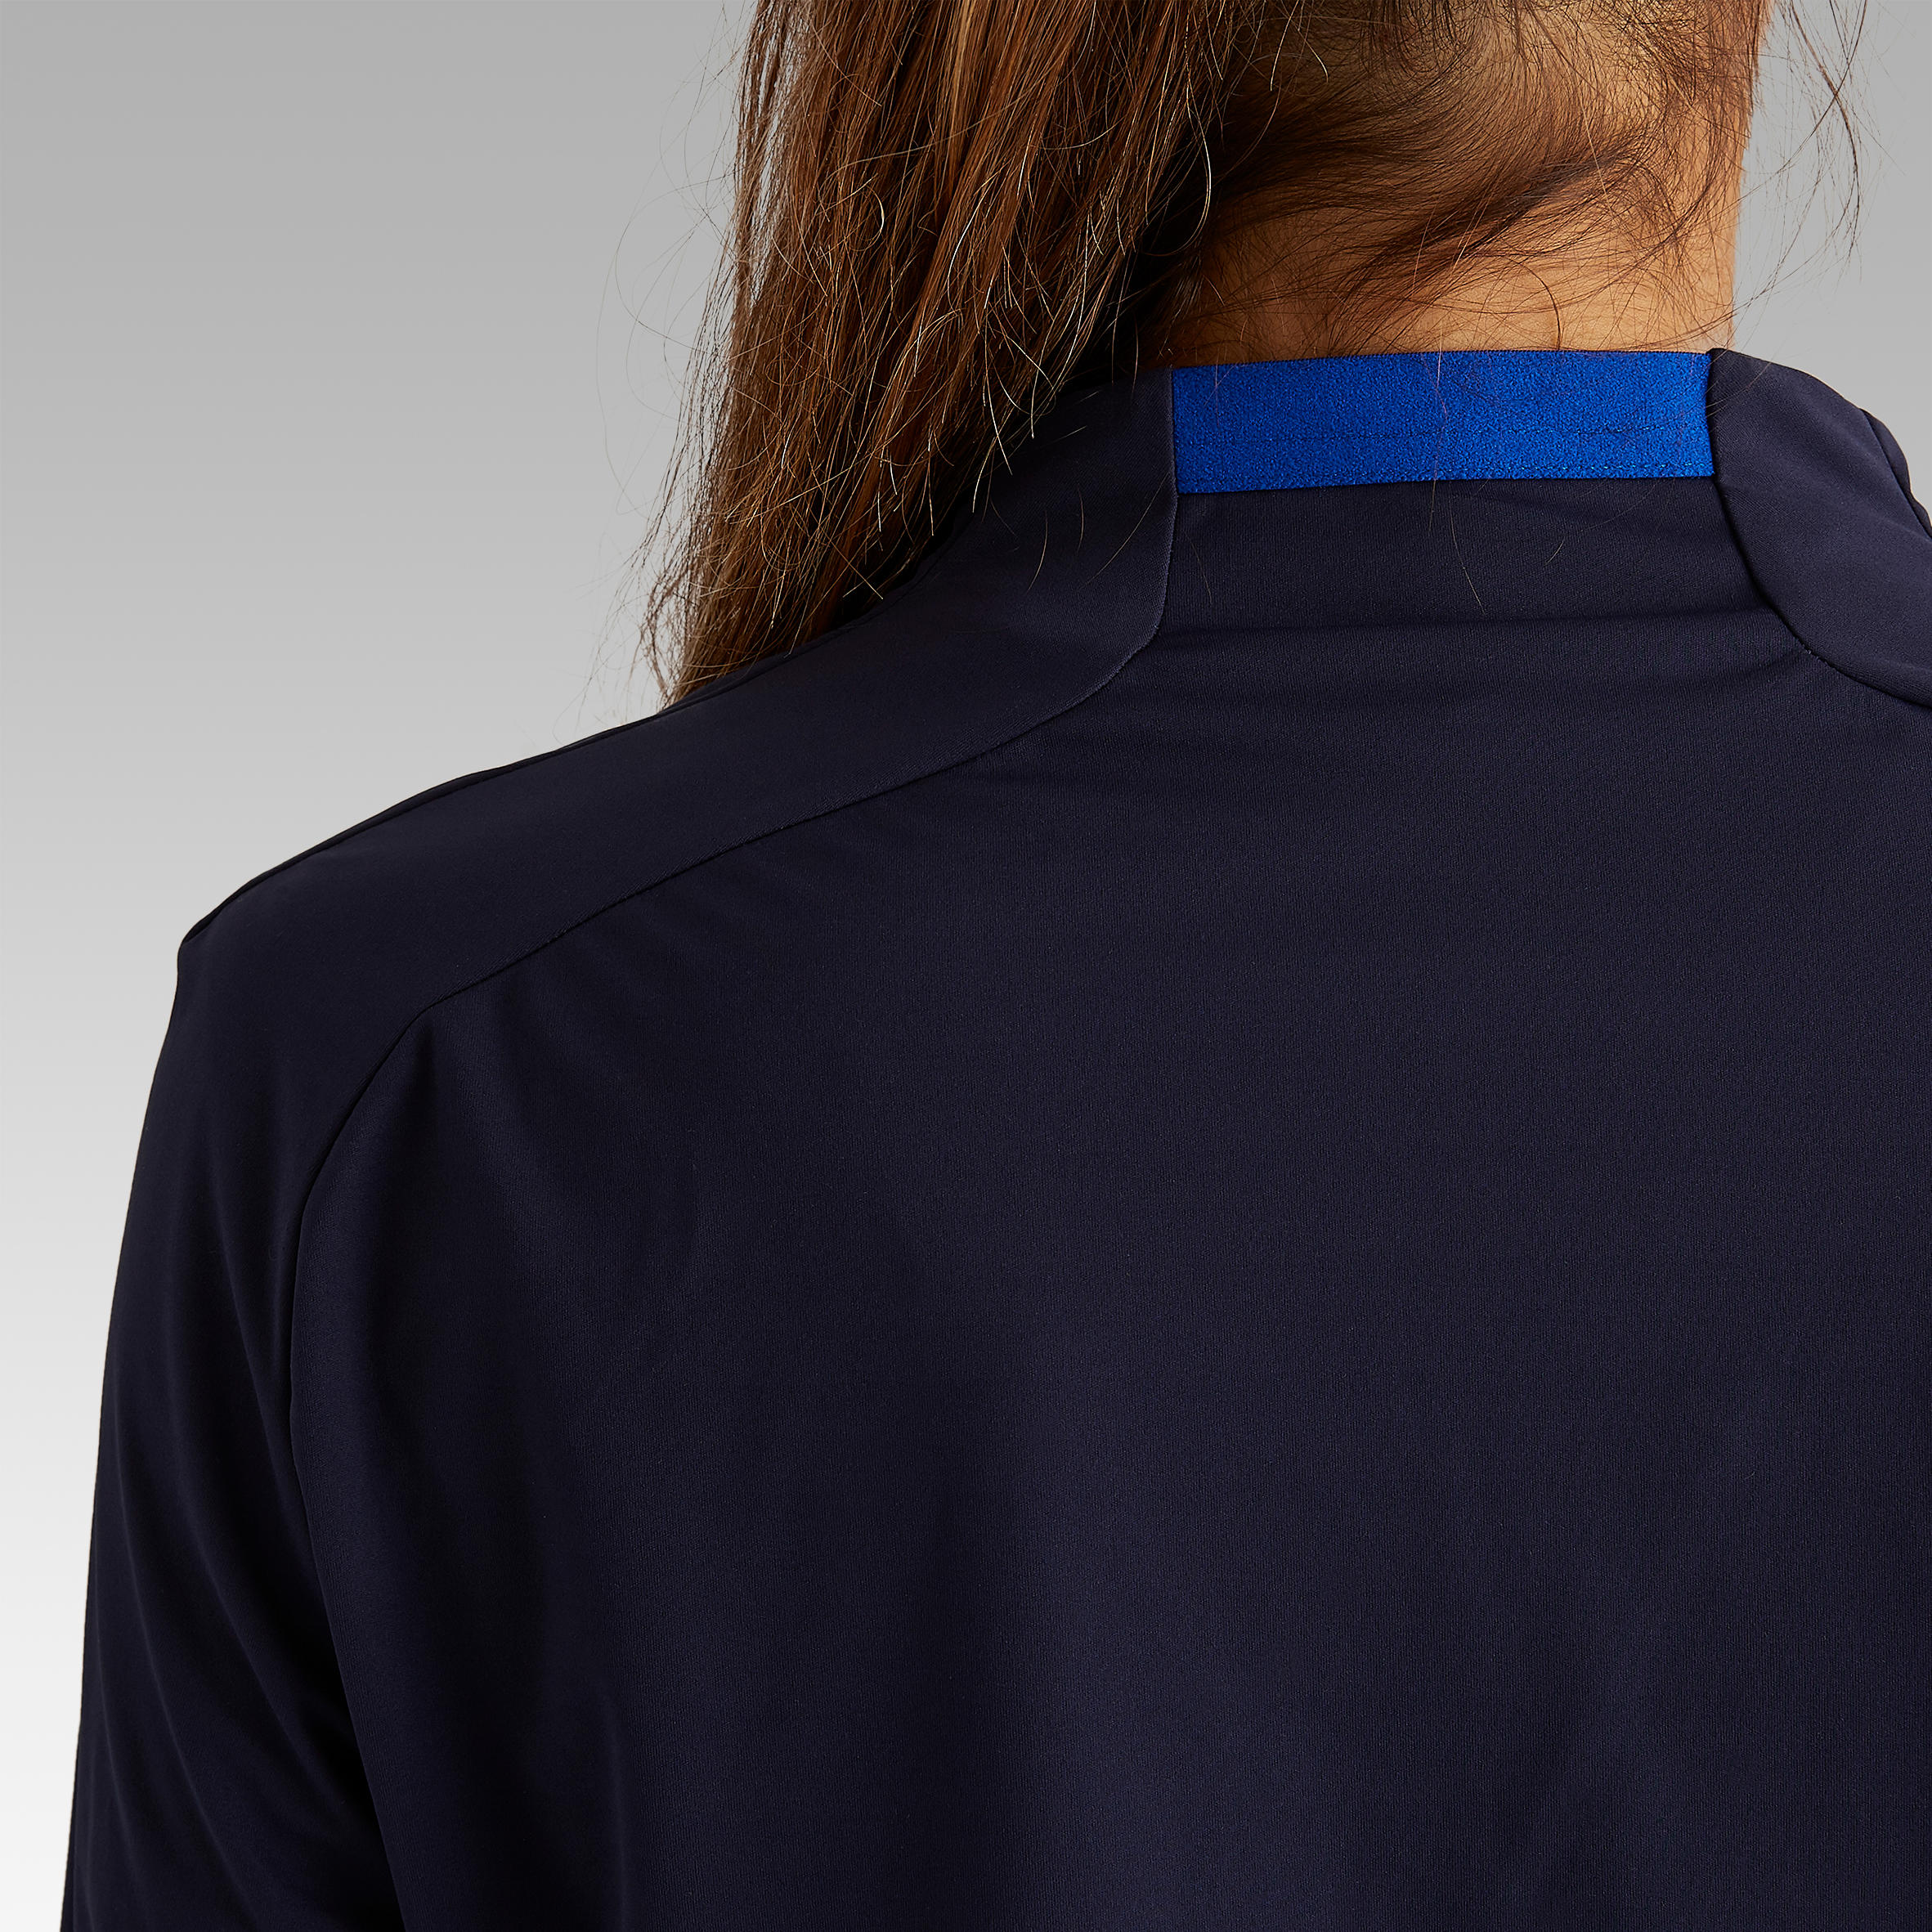 T500 Women's Football Training Sweatshirt - Blue 7/14